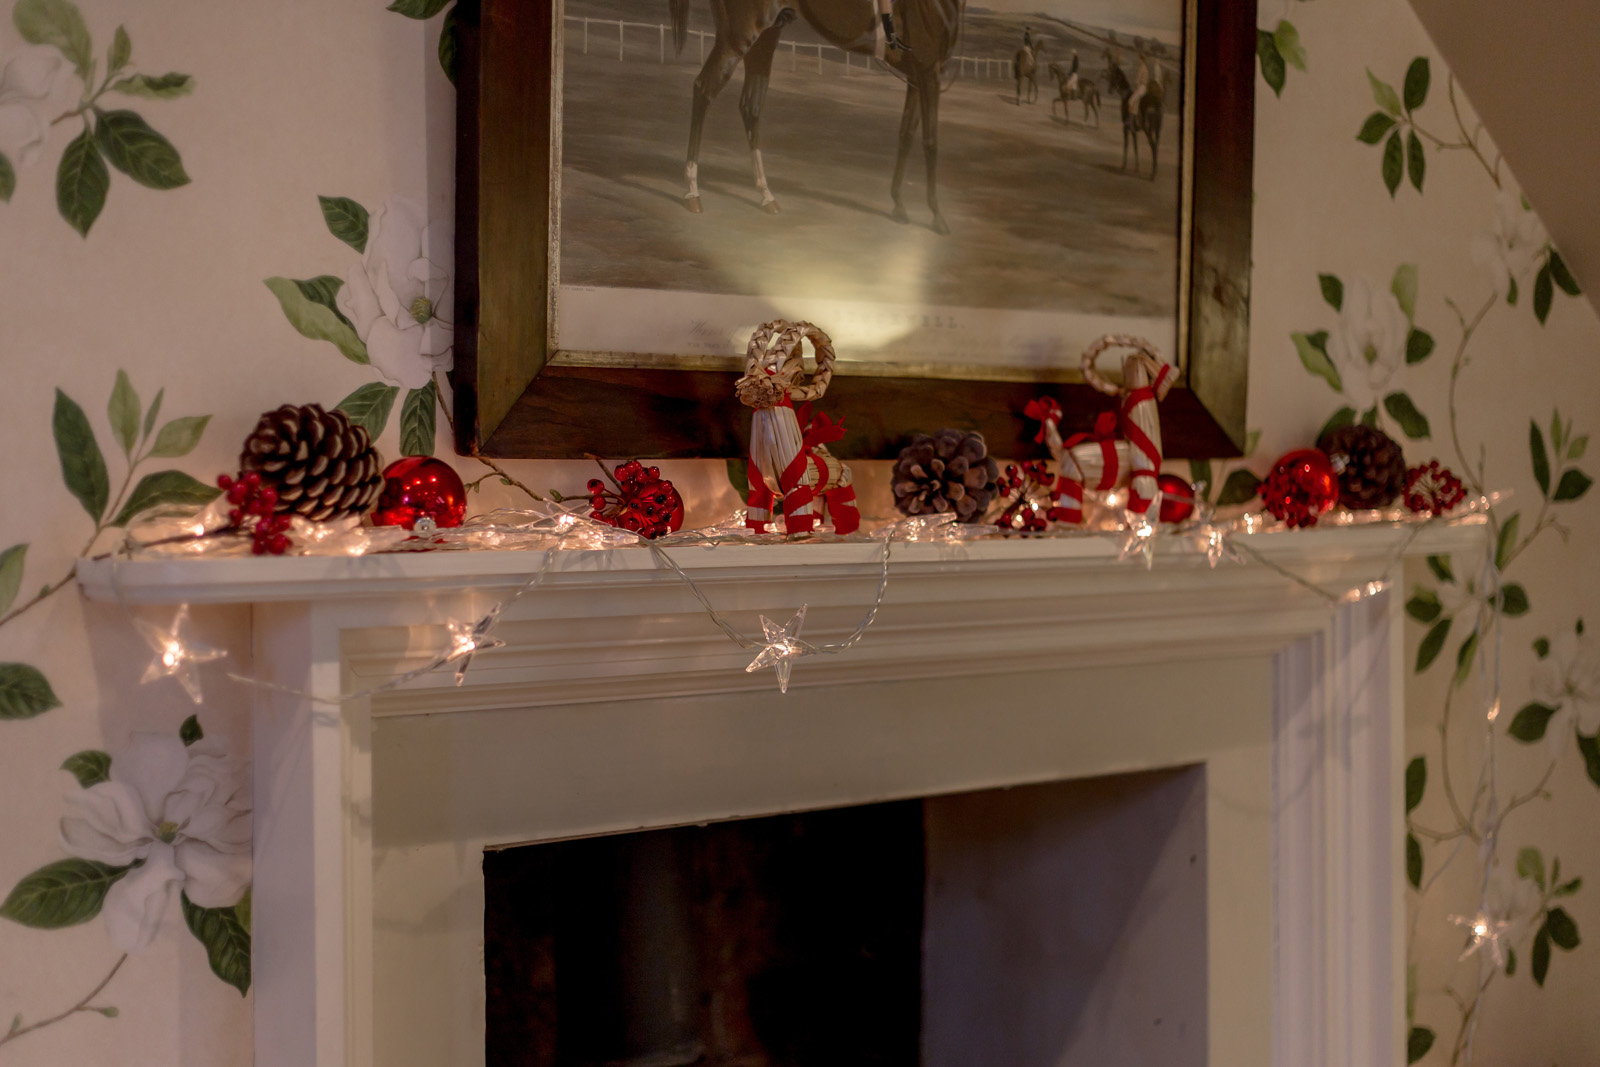 Festive decorations on the mantelpiece